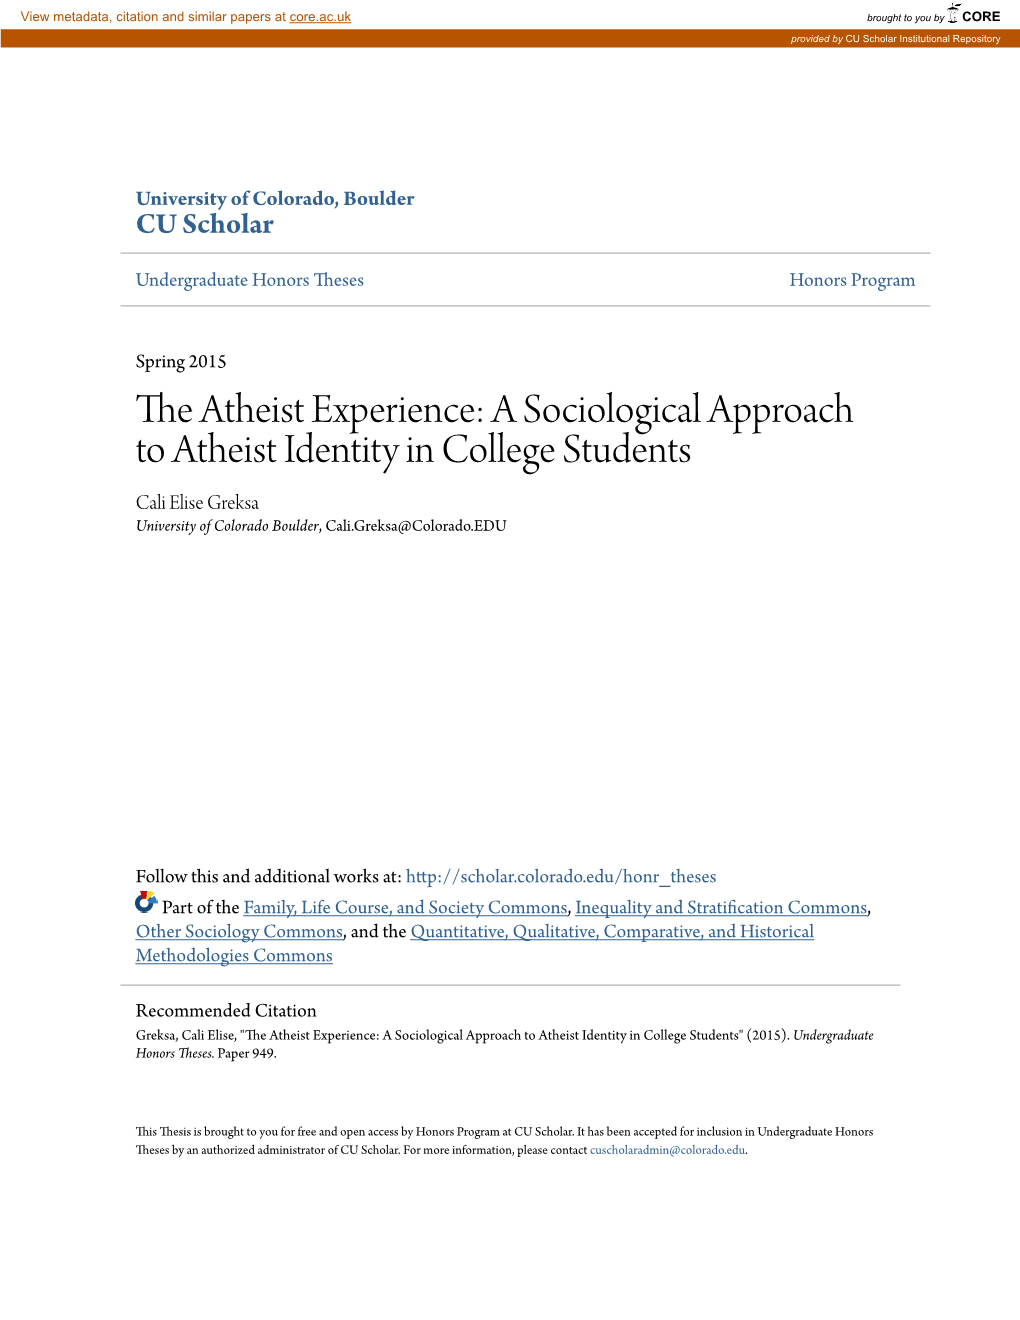 The Atheist Experience: a Sociological Approach to Atheist Identity in College Students Cali Elise Greksa University of Colorado Boulder, Cali.Greksa@Colorado.EDU